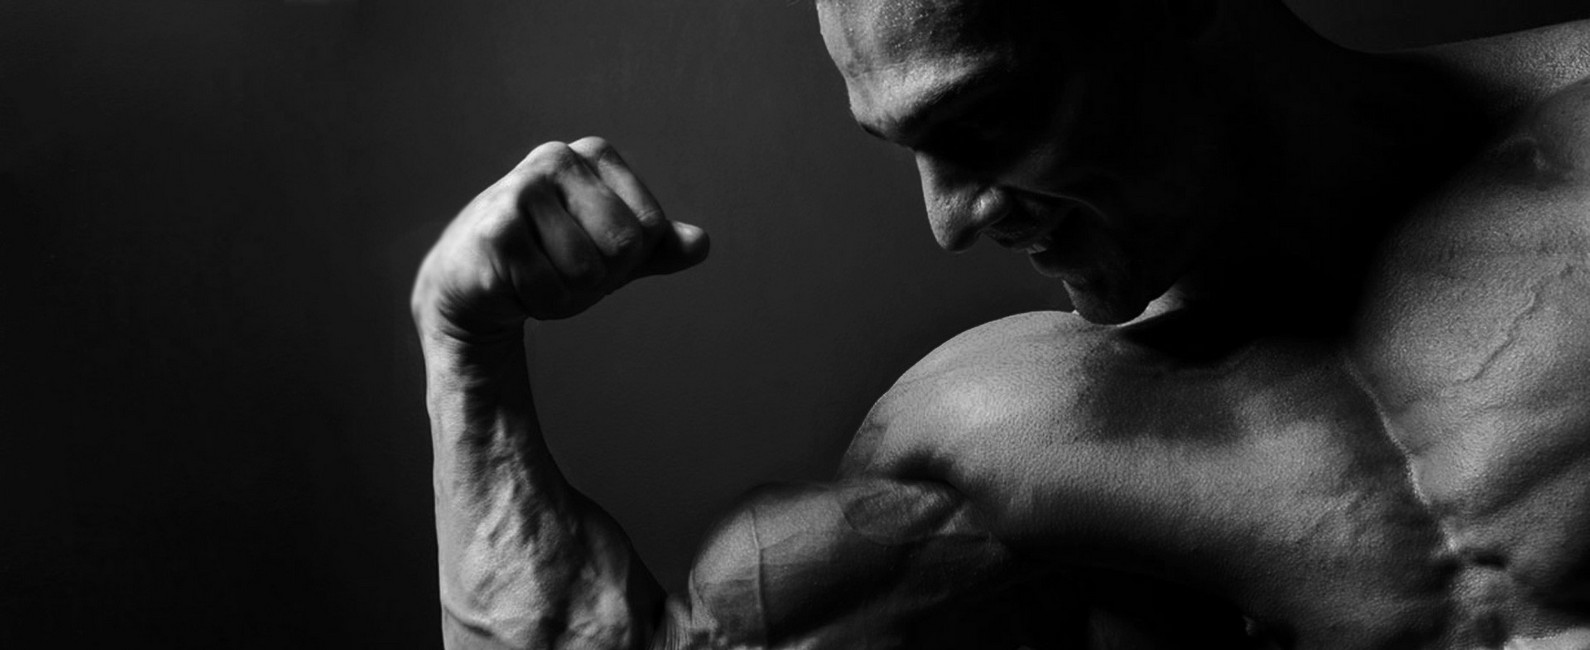 Cutting stack bodybuilding